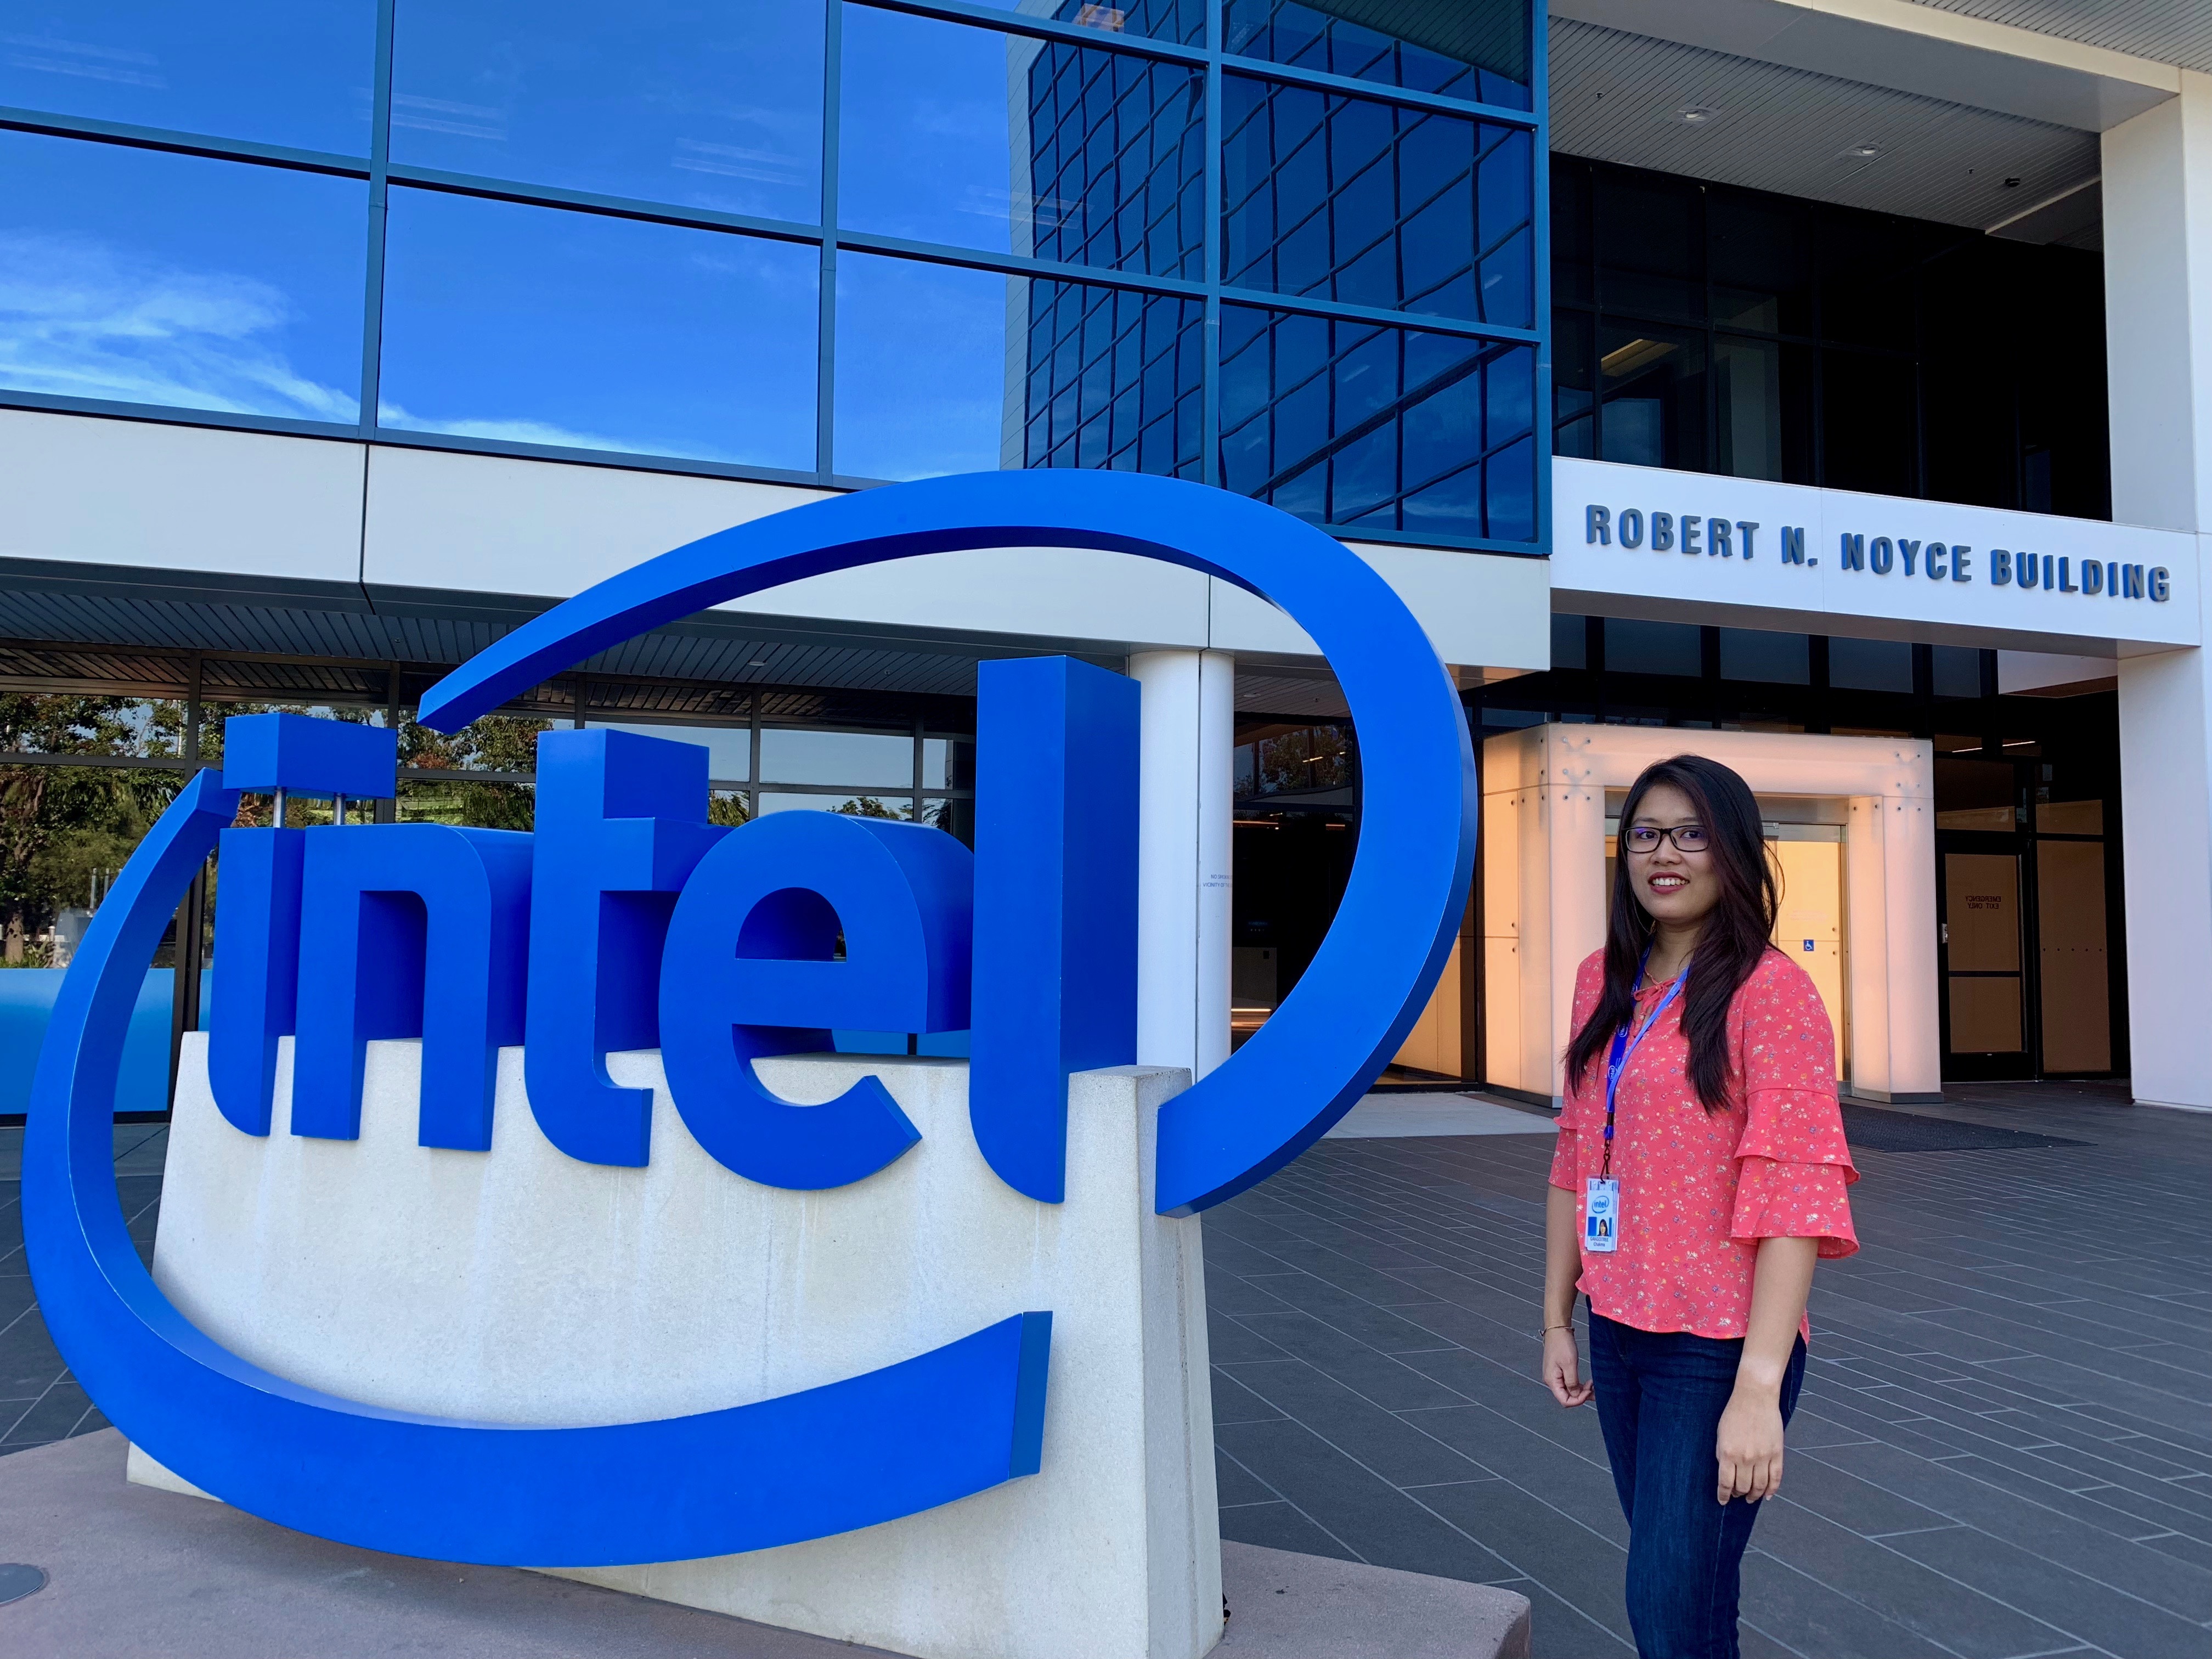 Gangotree at Intel